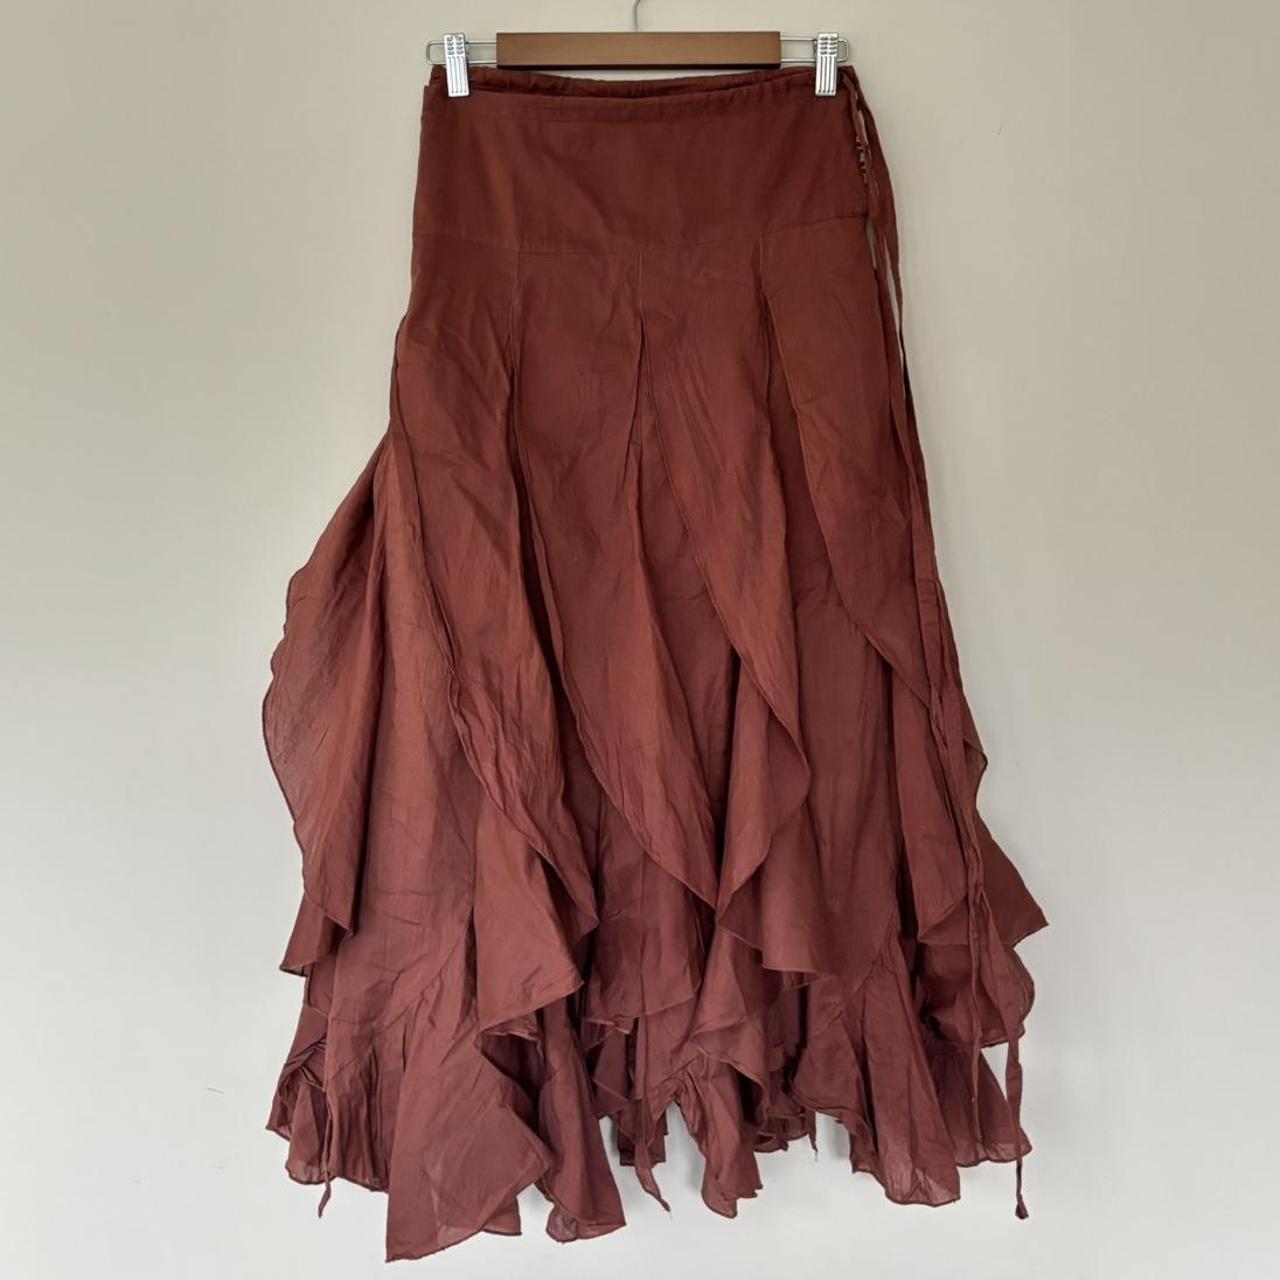 Fiorucci Women's Orange and Brown Skirt (4)